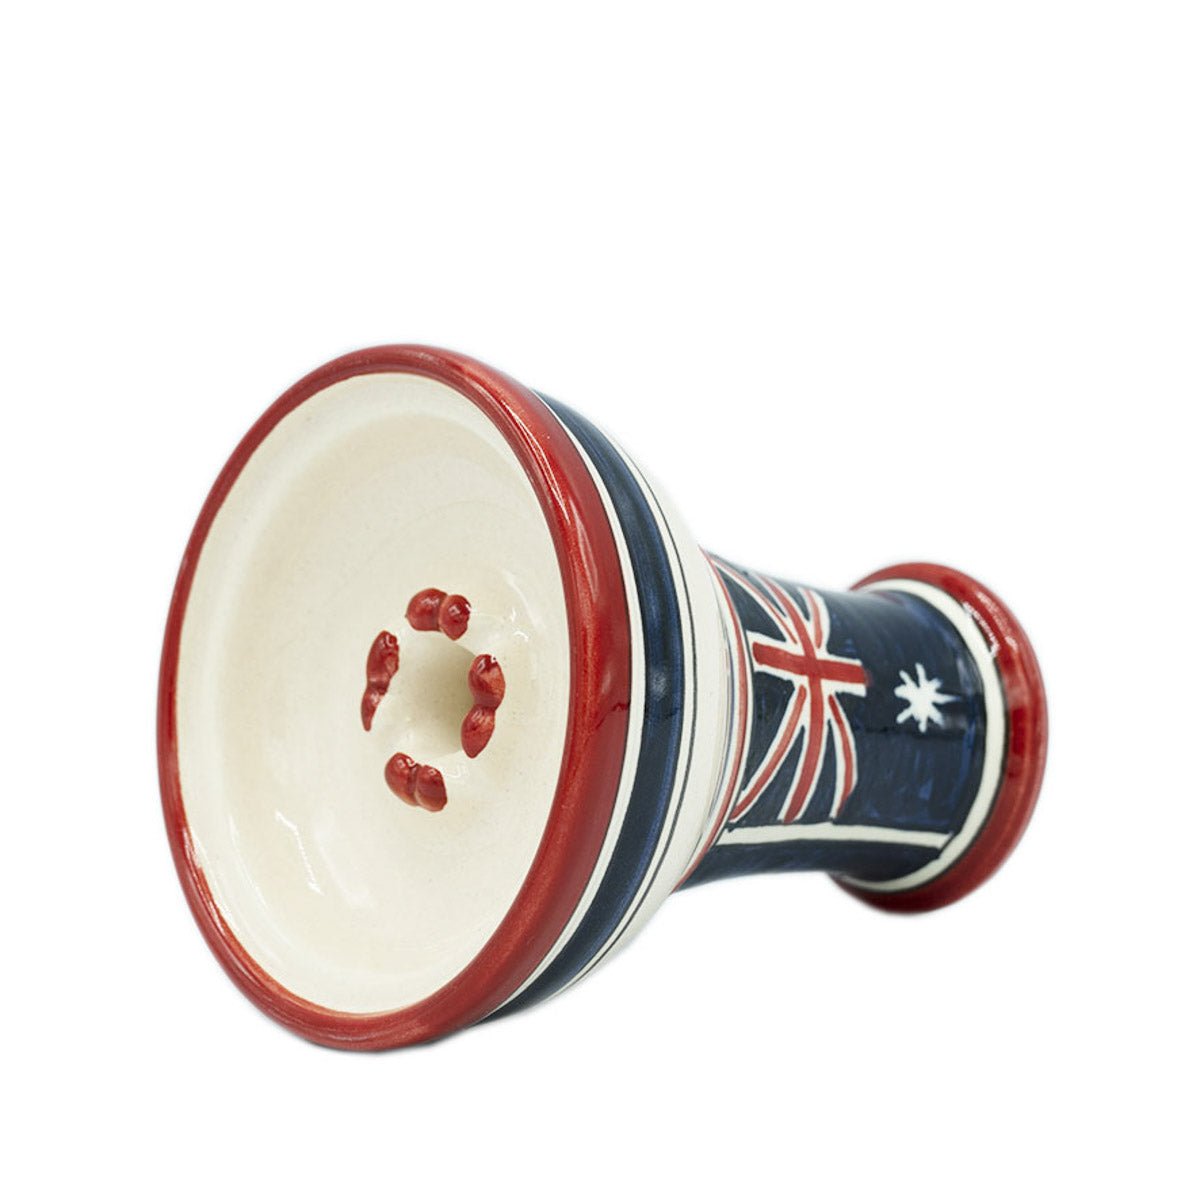 AUSTRALIA FLAG - Olla Bowls